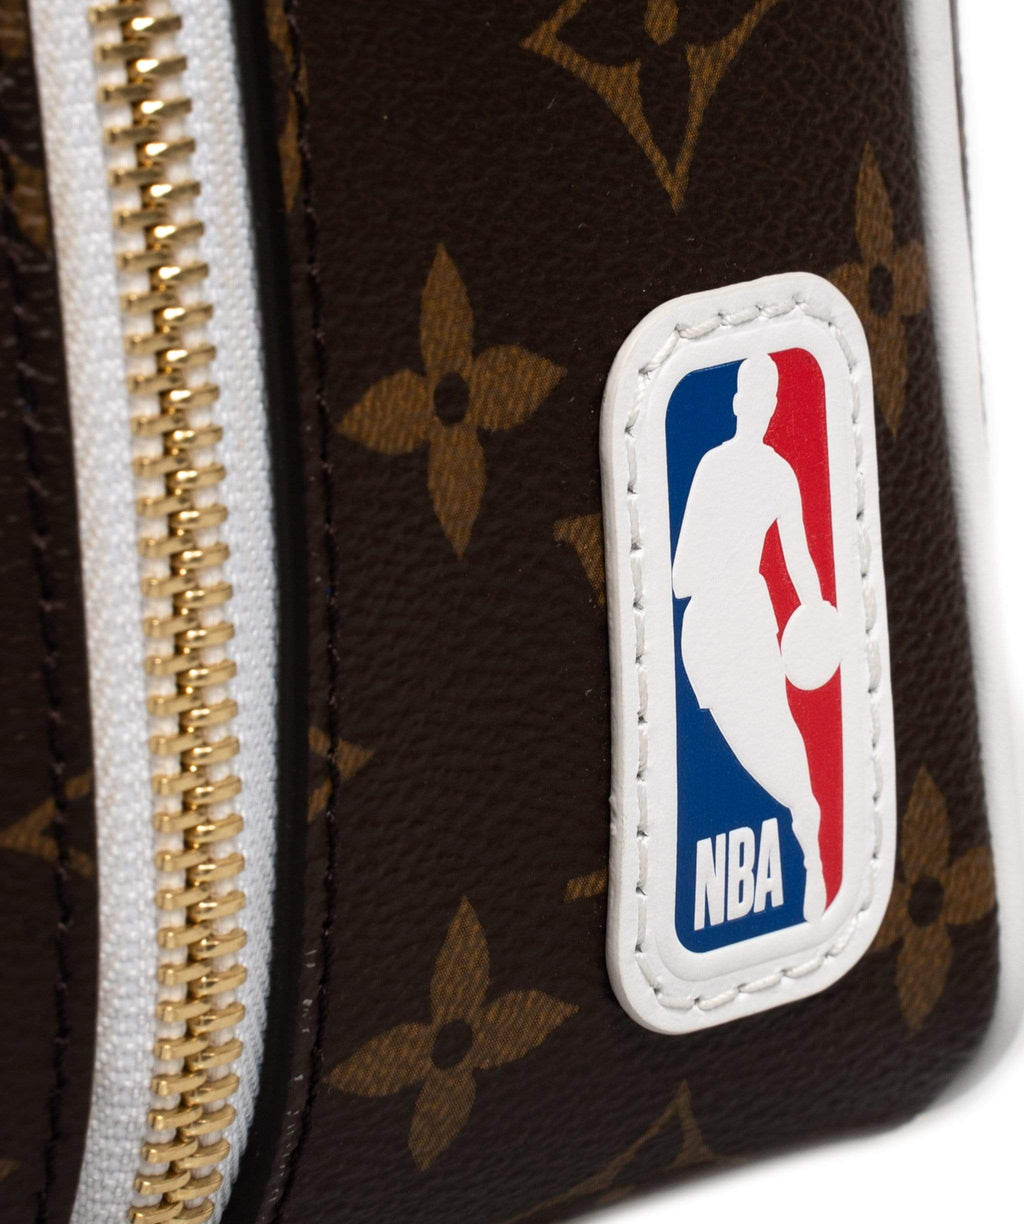 Dopp kit cloakroom leather bag Louis Vuitton X NBA Black in